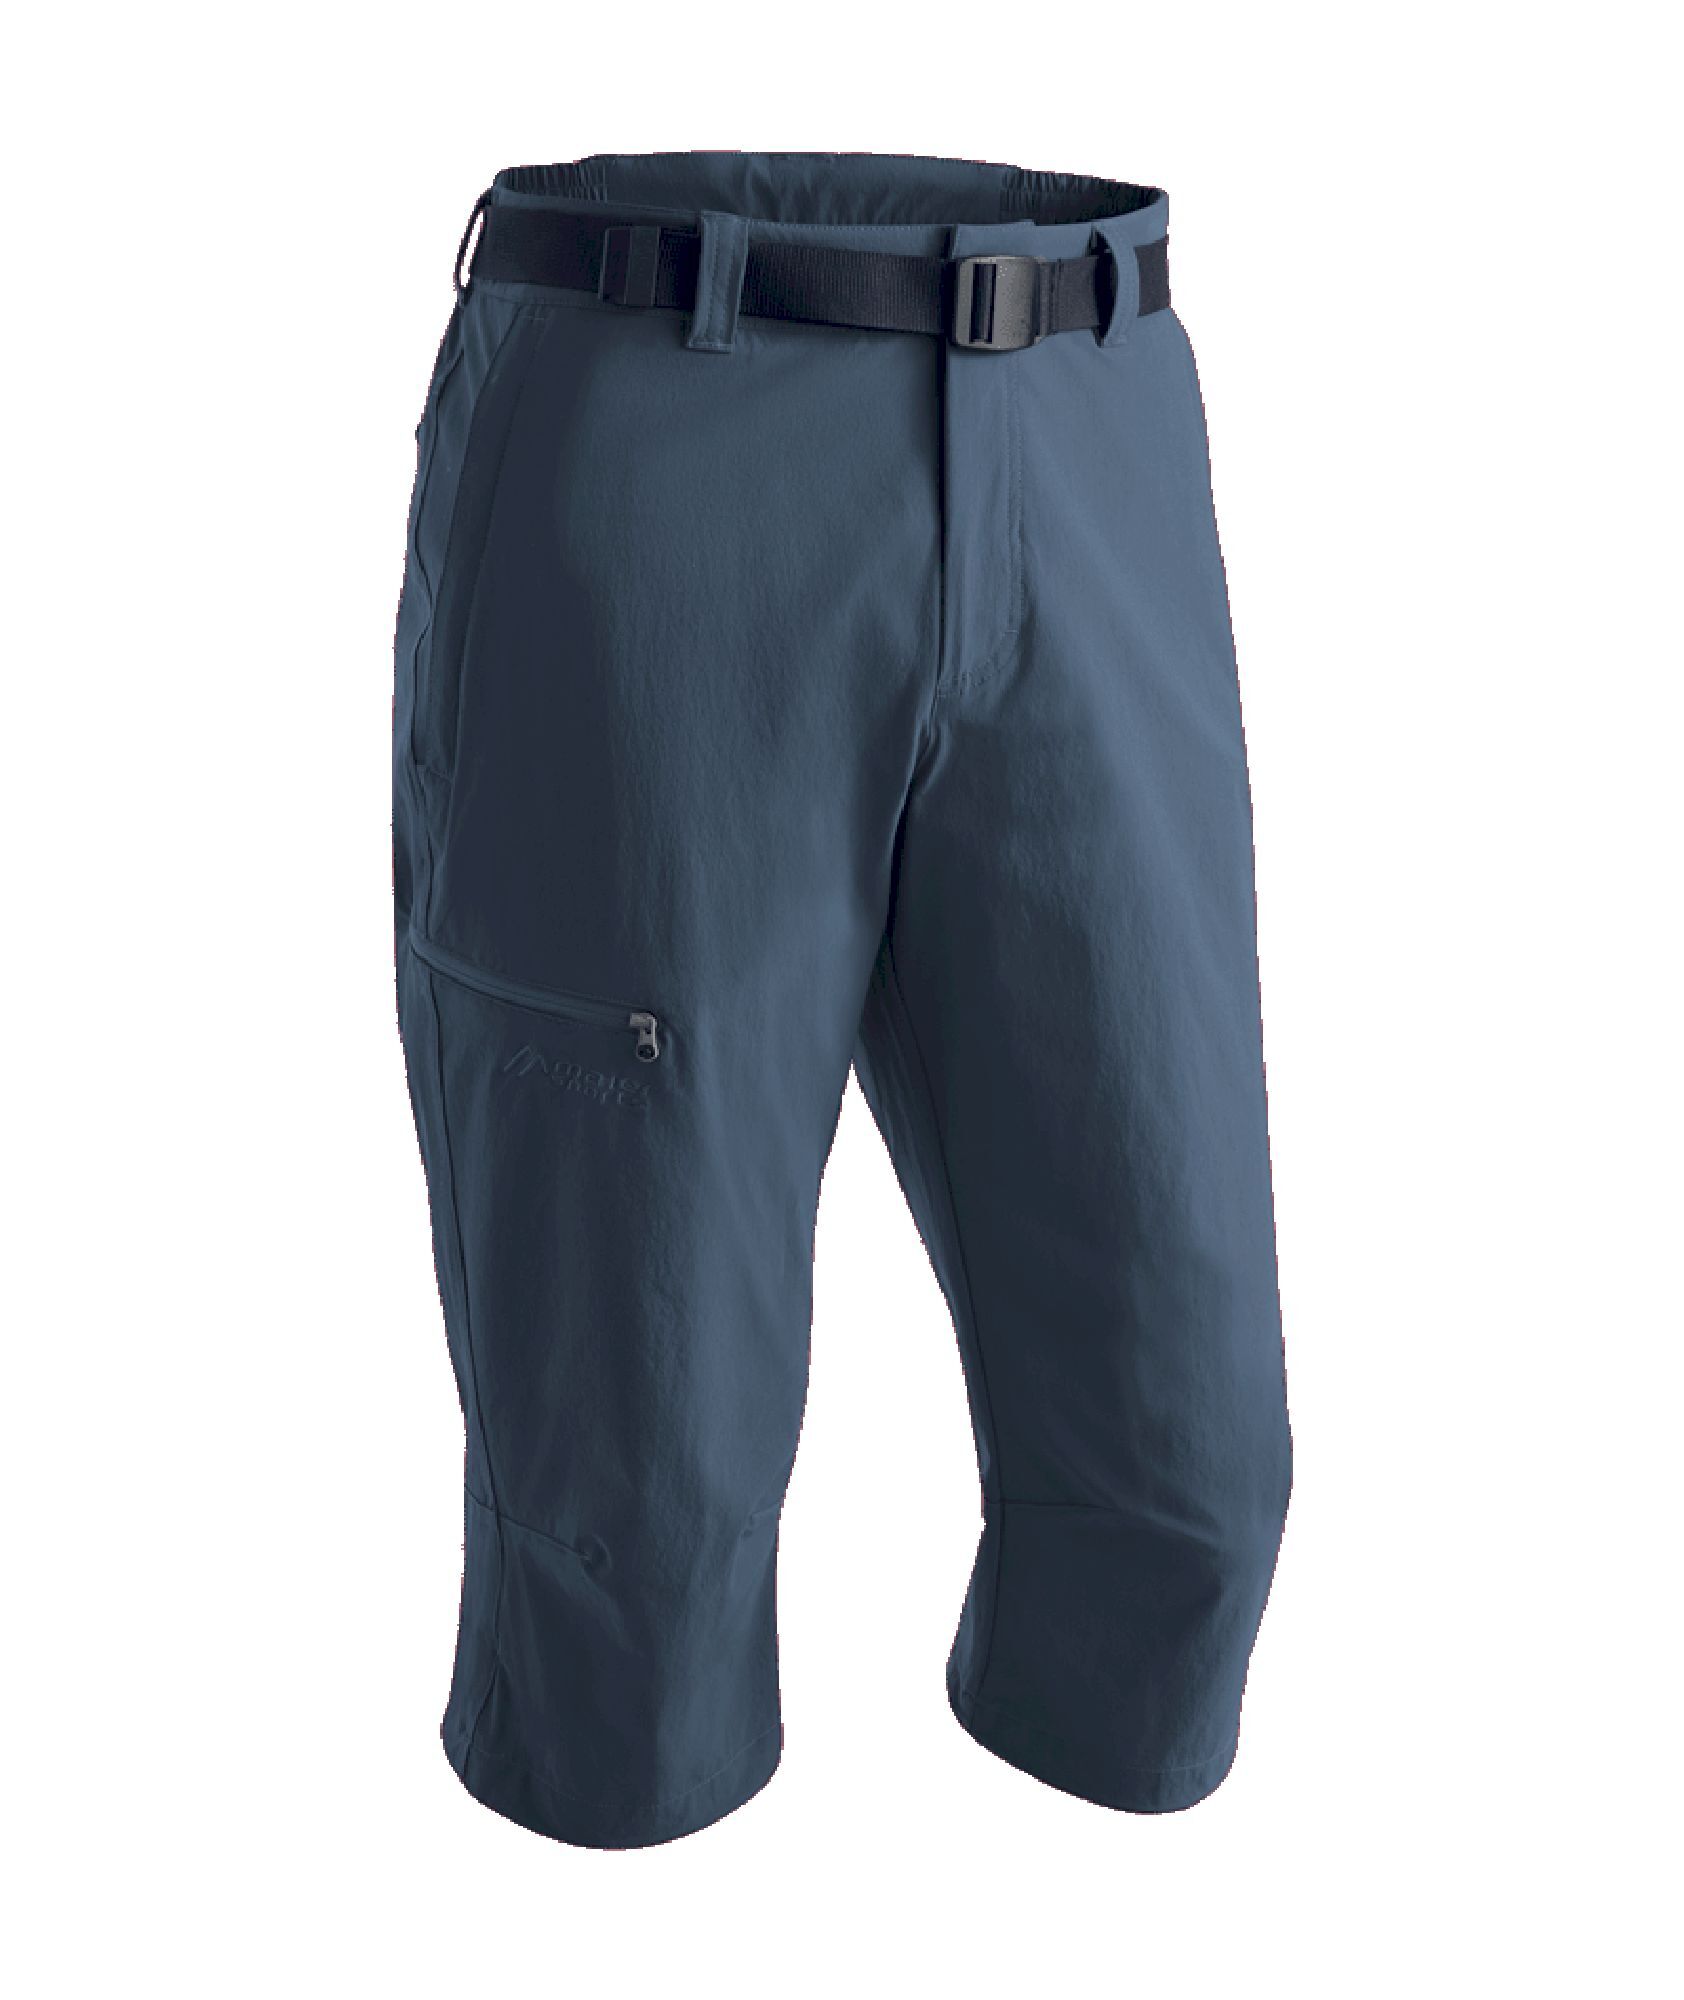 Maier Sports Jennisei Short Pant - Spodnie turystyczne męskie | Hardloop